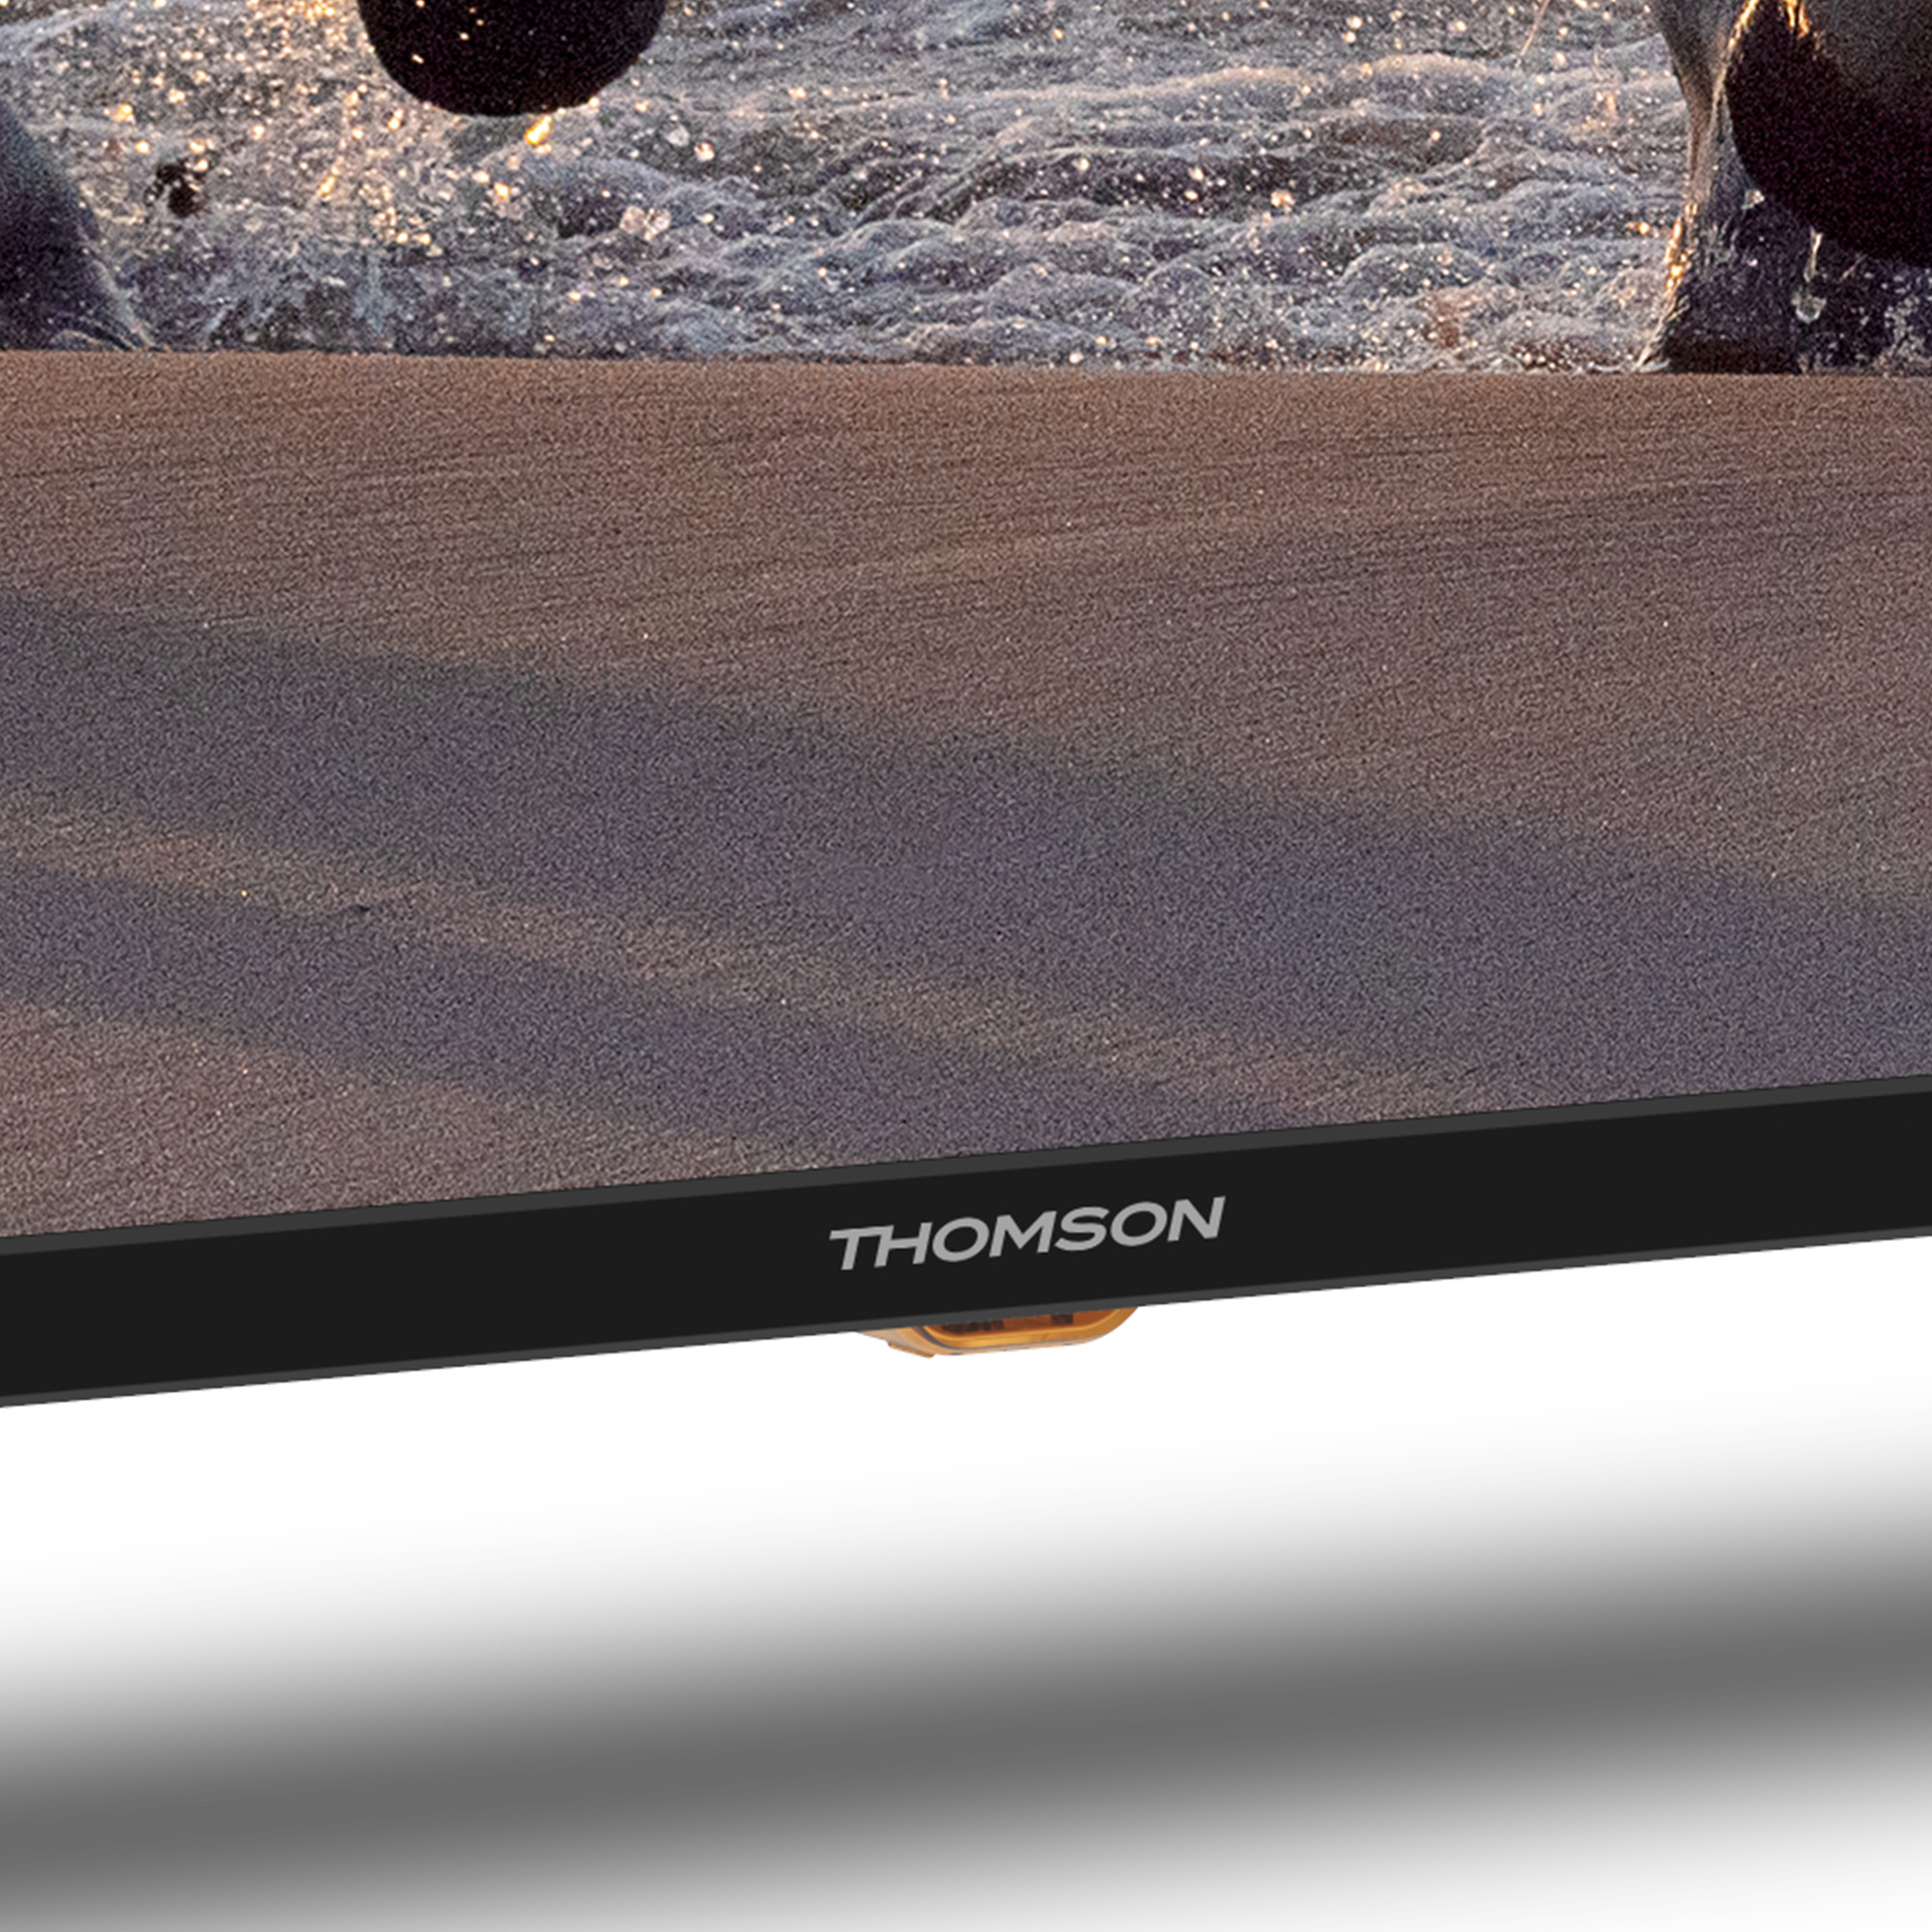 Thomson Android TV 65 UHD